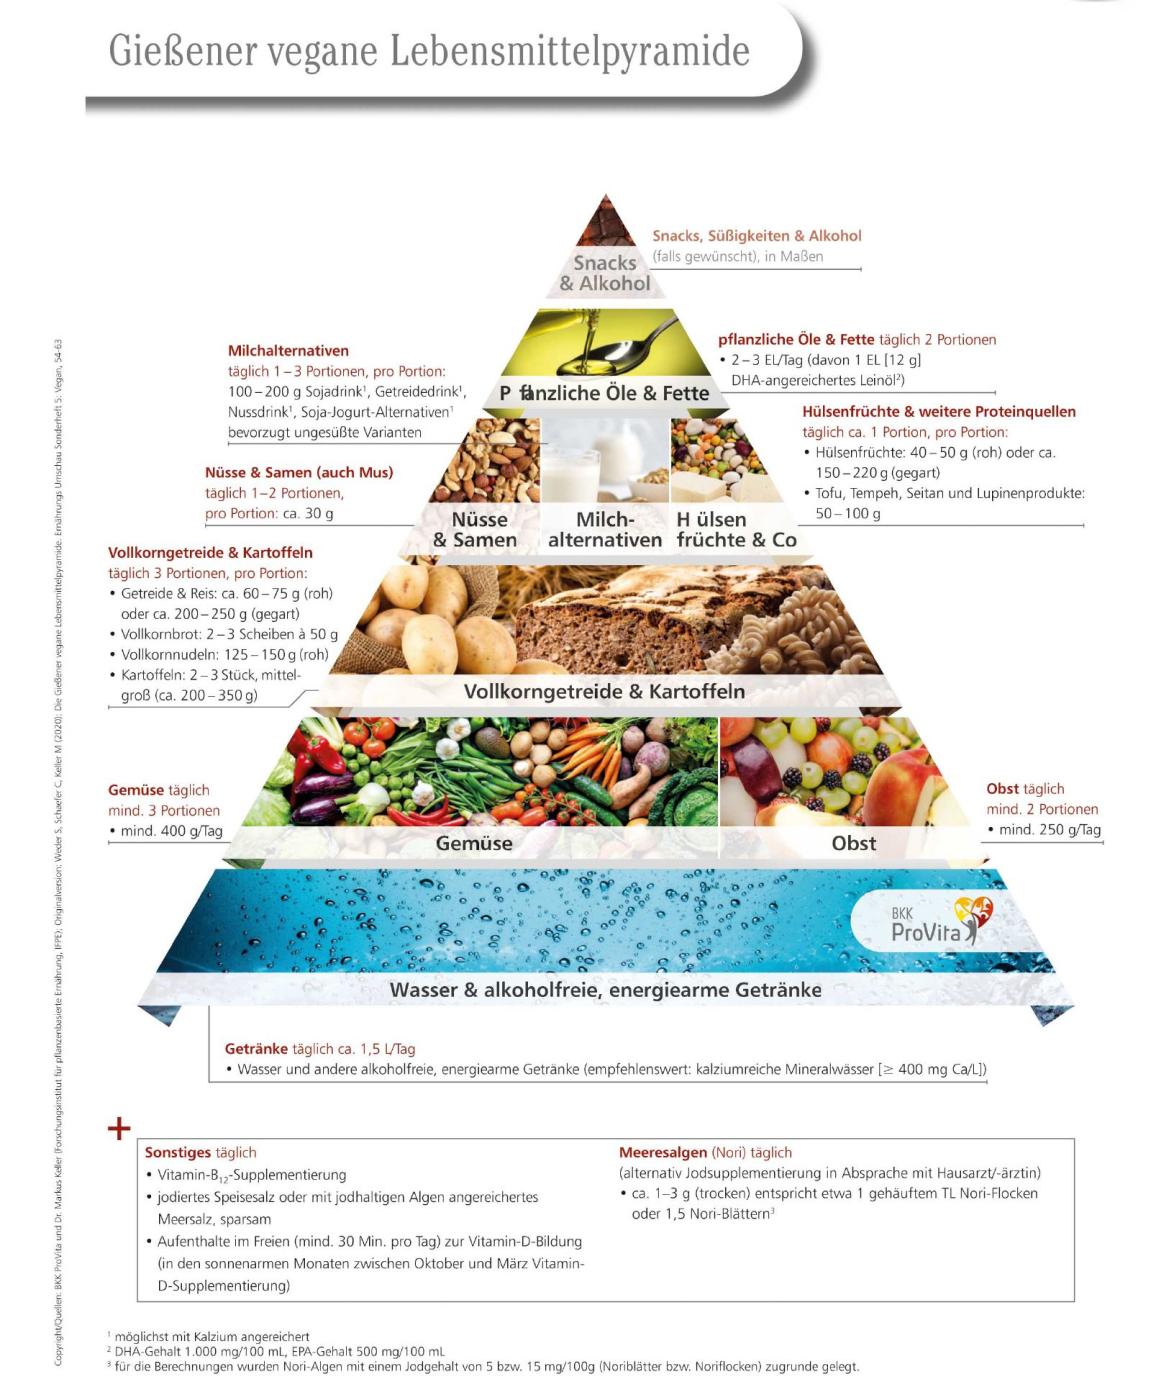 Die Gießener vegane Lebensmittelpyramide,